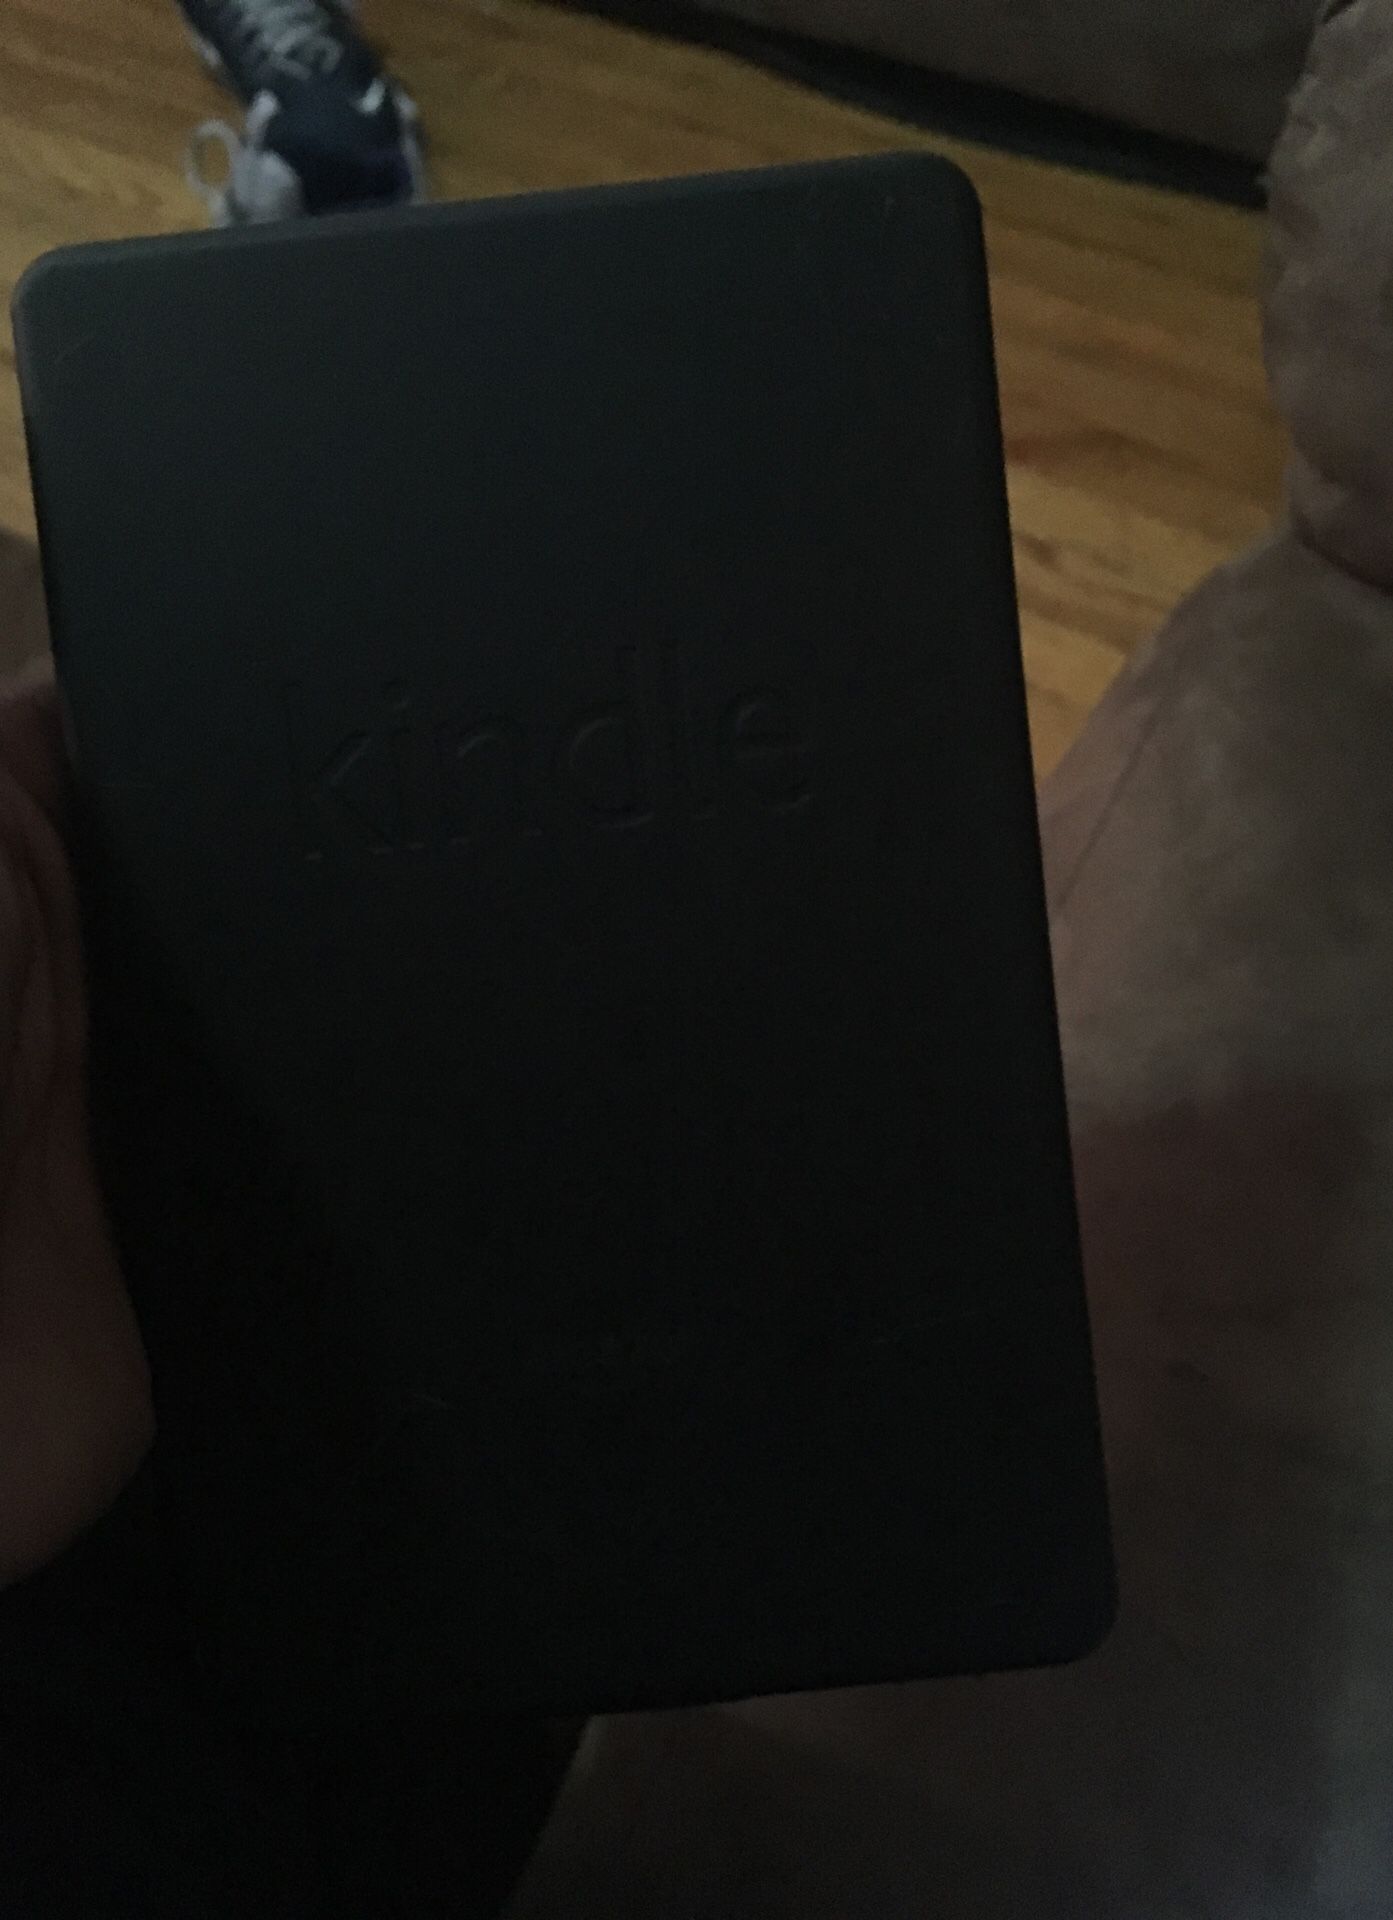 Kindle tablet